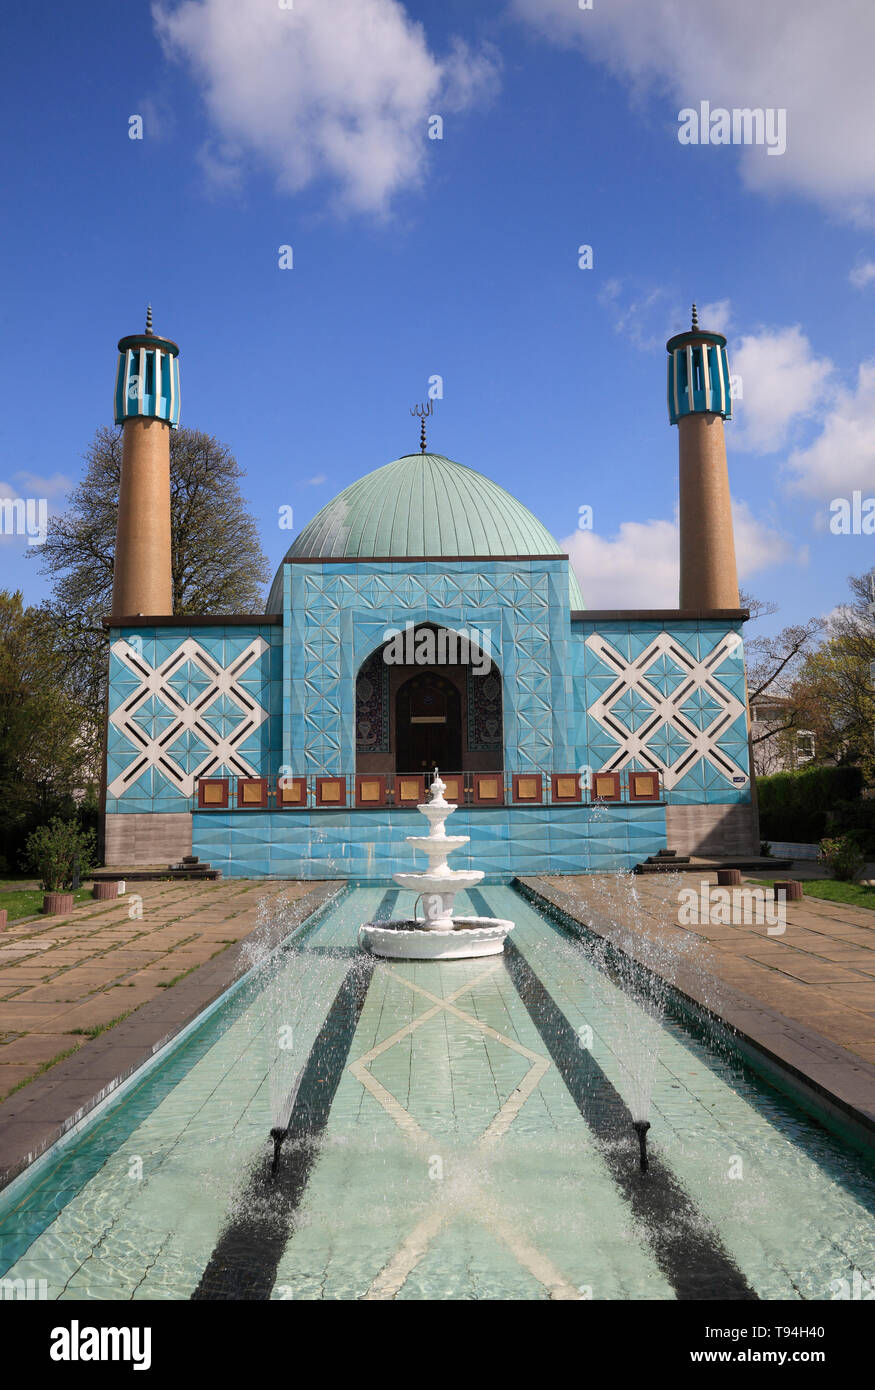 Imam-Ali-Moschee (Blaue Moschee) near lake Alster, Hamburg, Germany, Europe Stock Photo